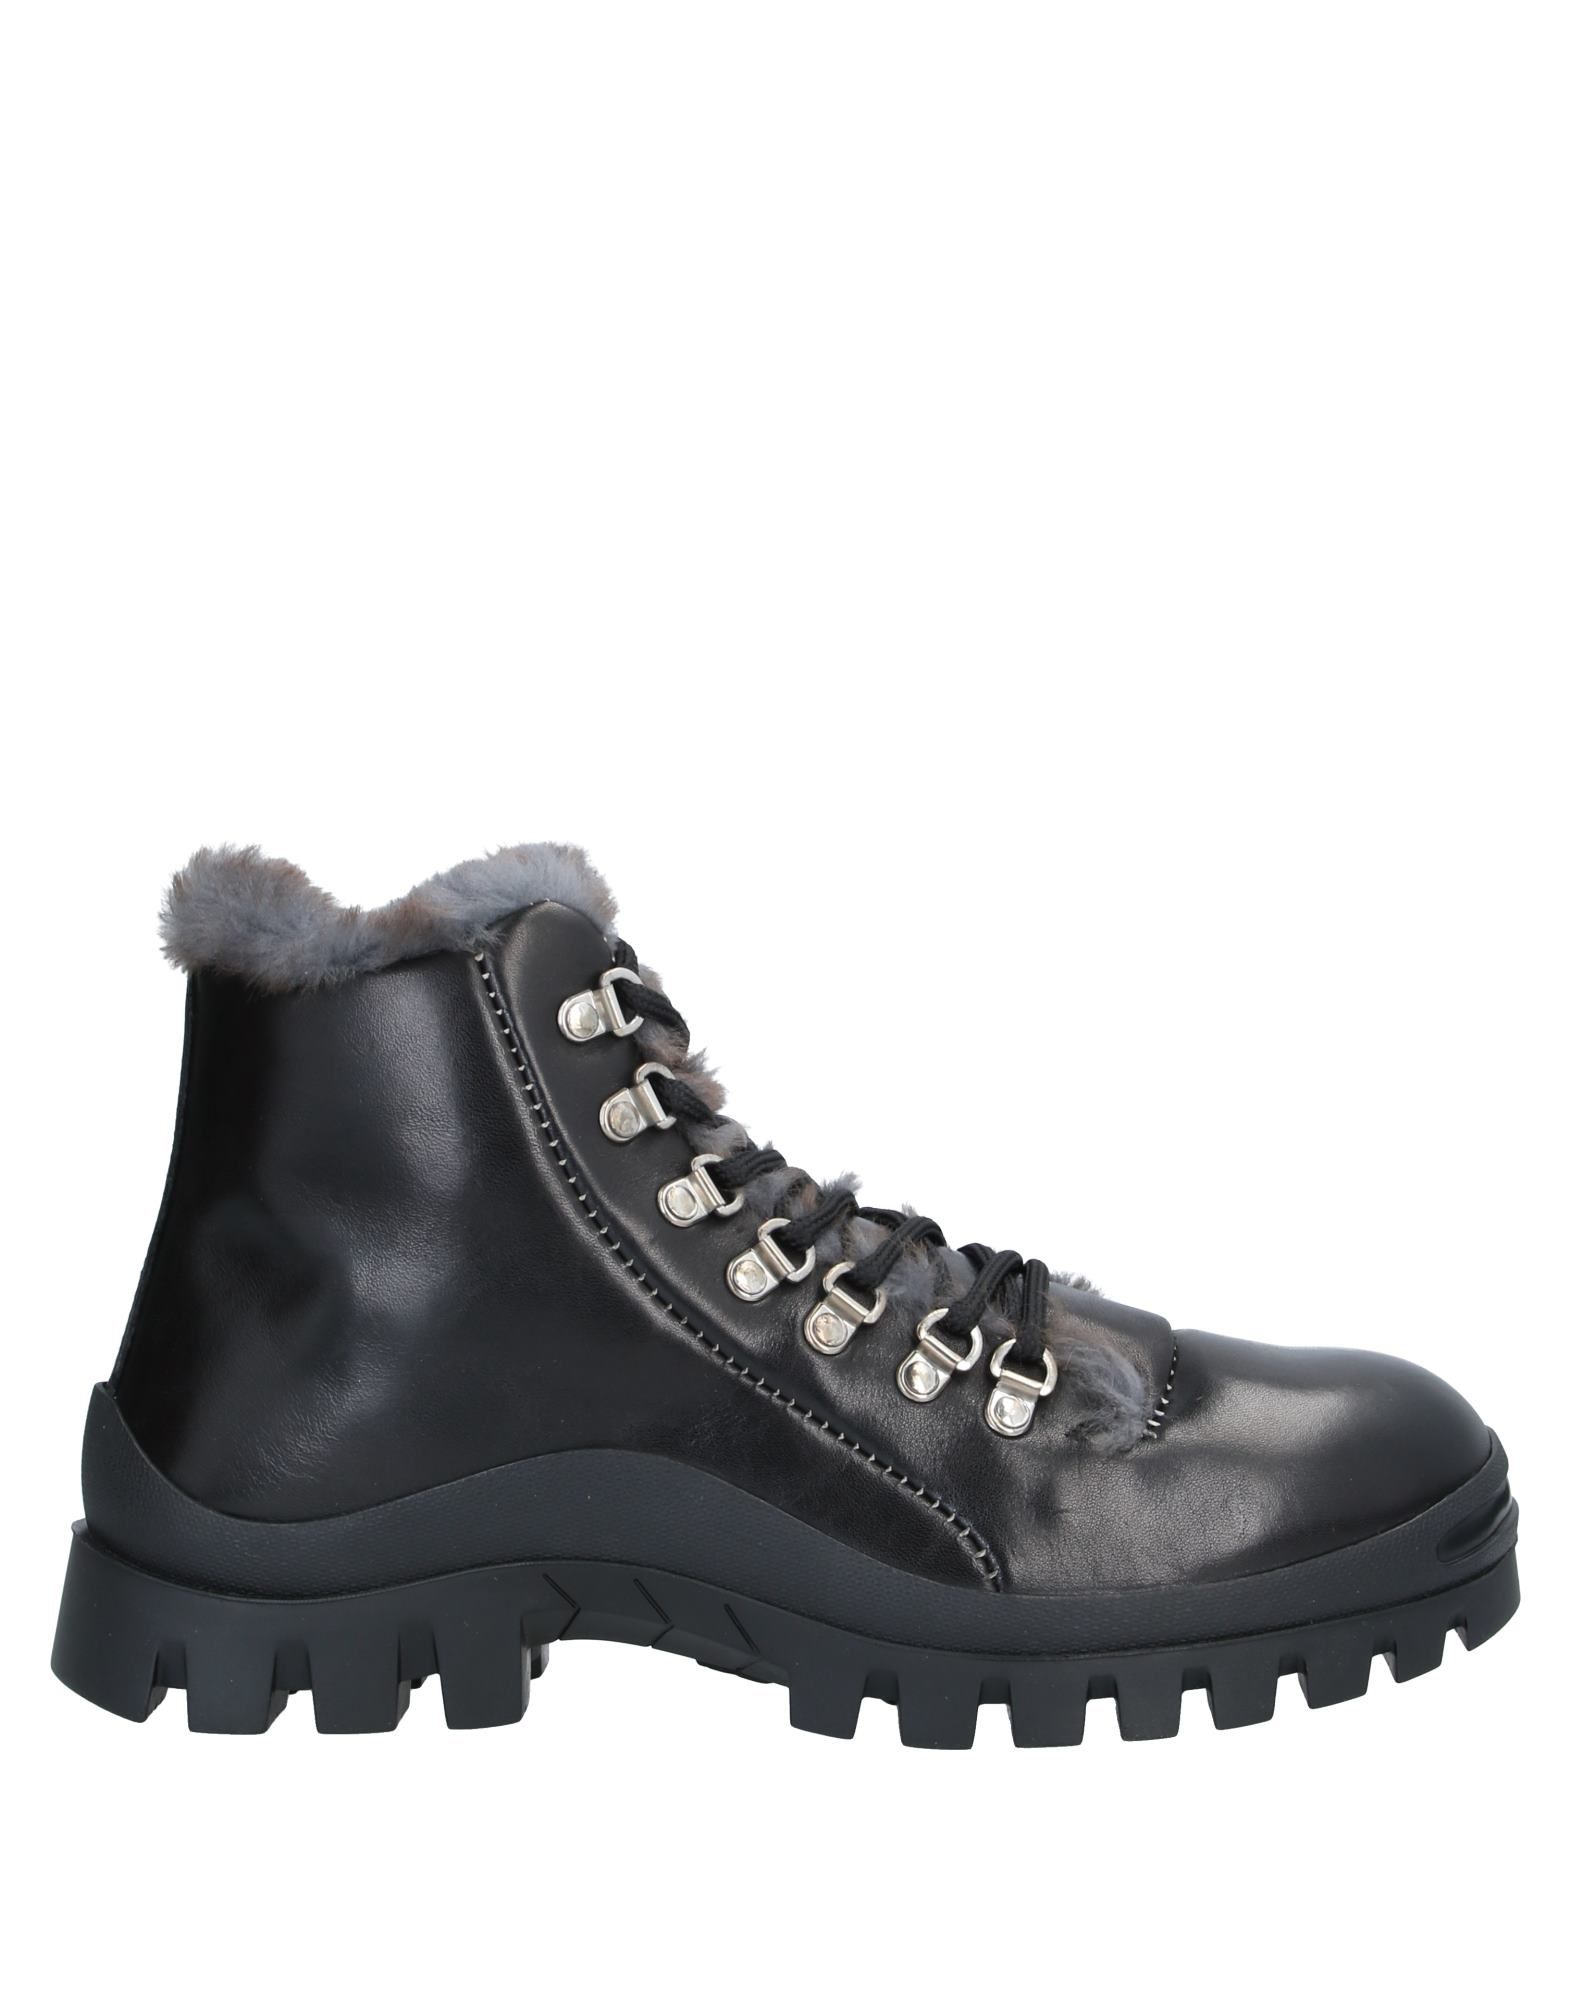 PREMIATA Ankle boots - Item 11936024